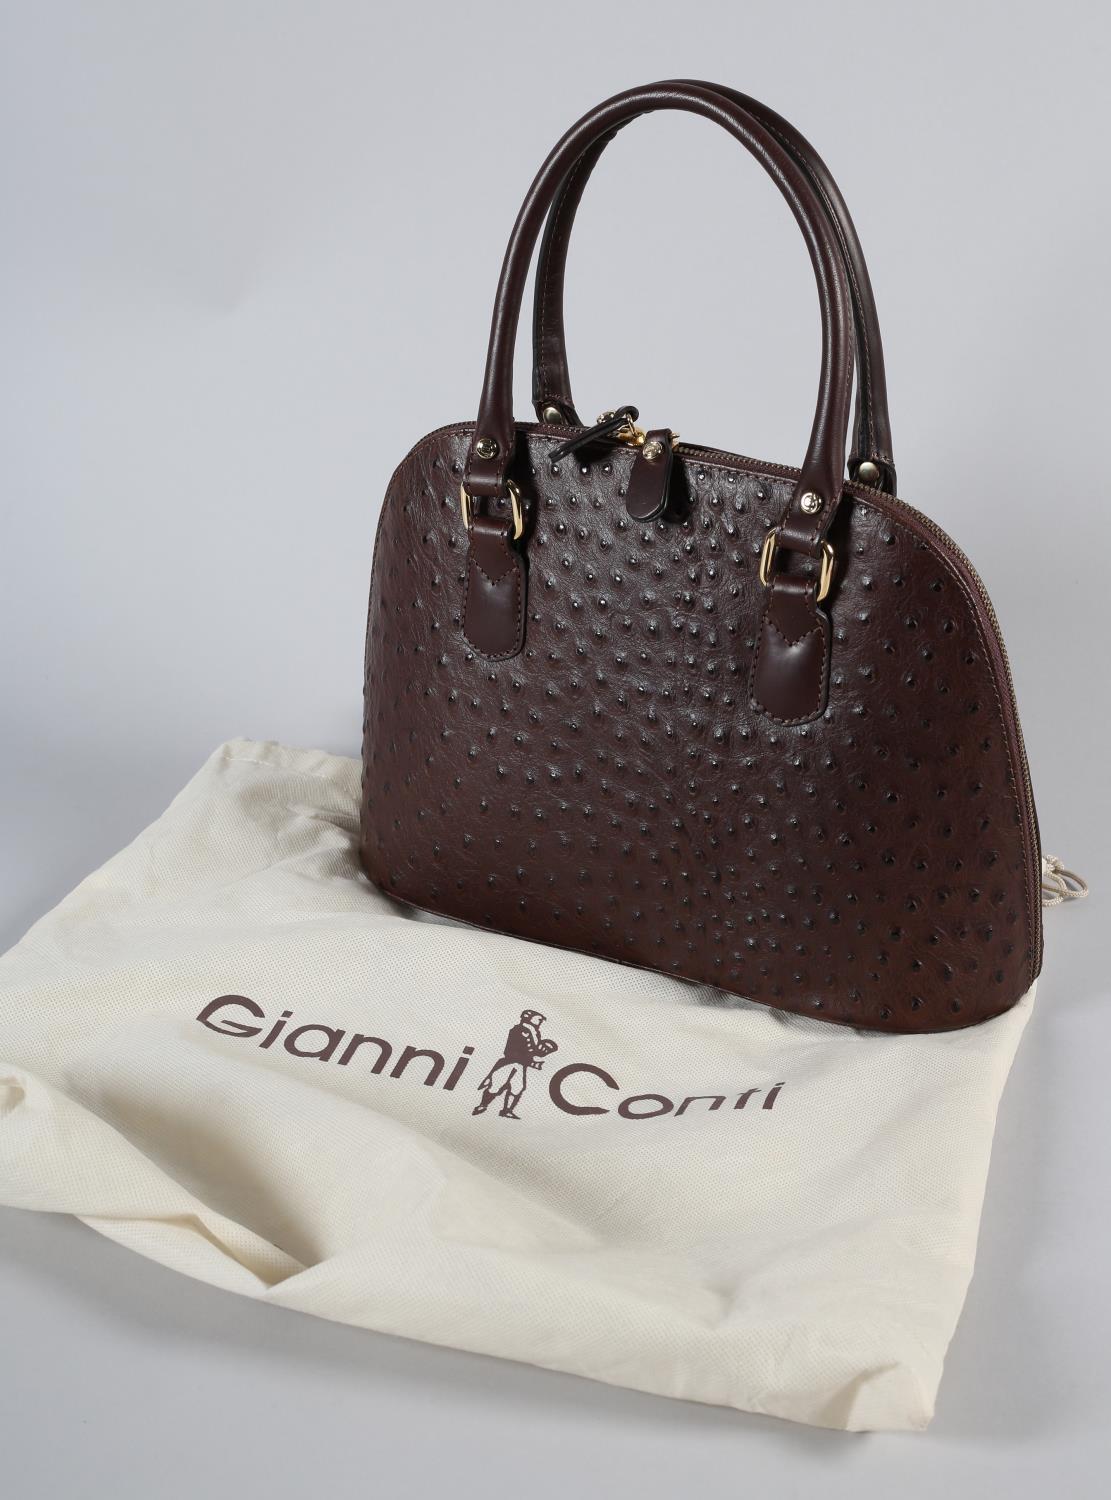 A Gianno Conti handbag in dark brown 'ostrich' leather, with strap, original dustbag, condition: